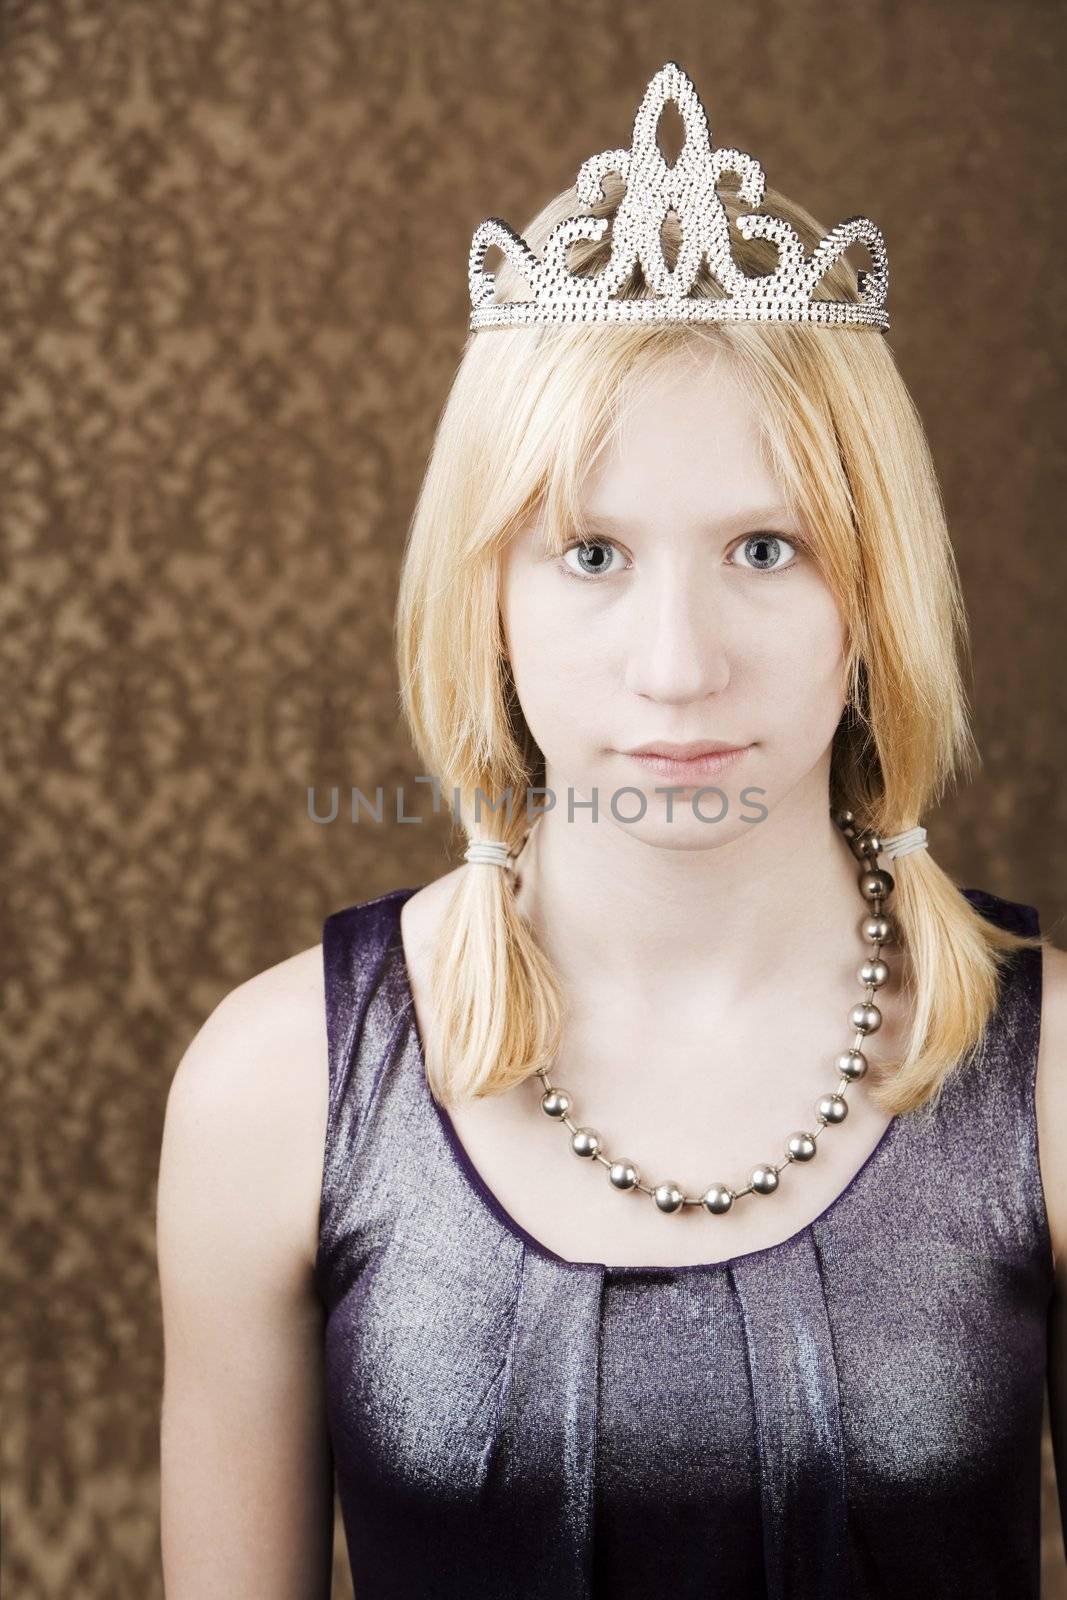 Portrait of pretty young girl wearing a tiara